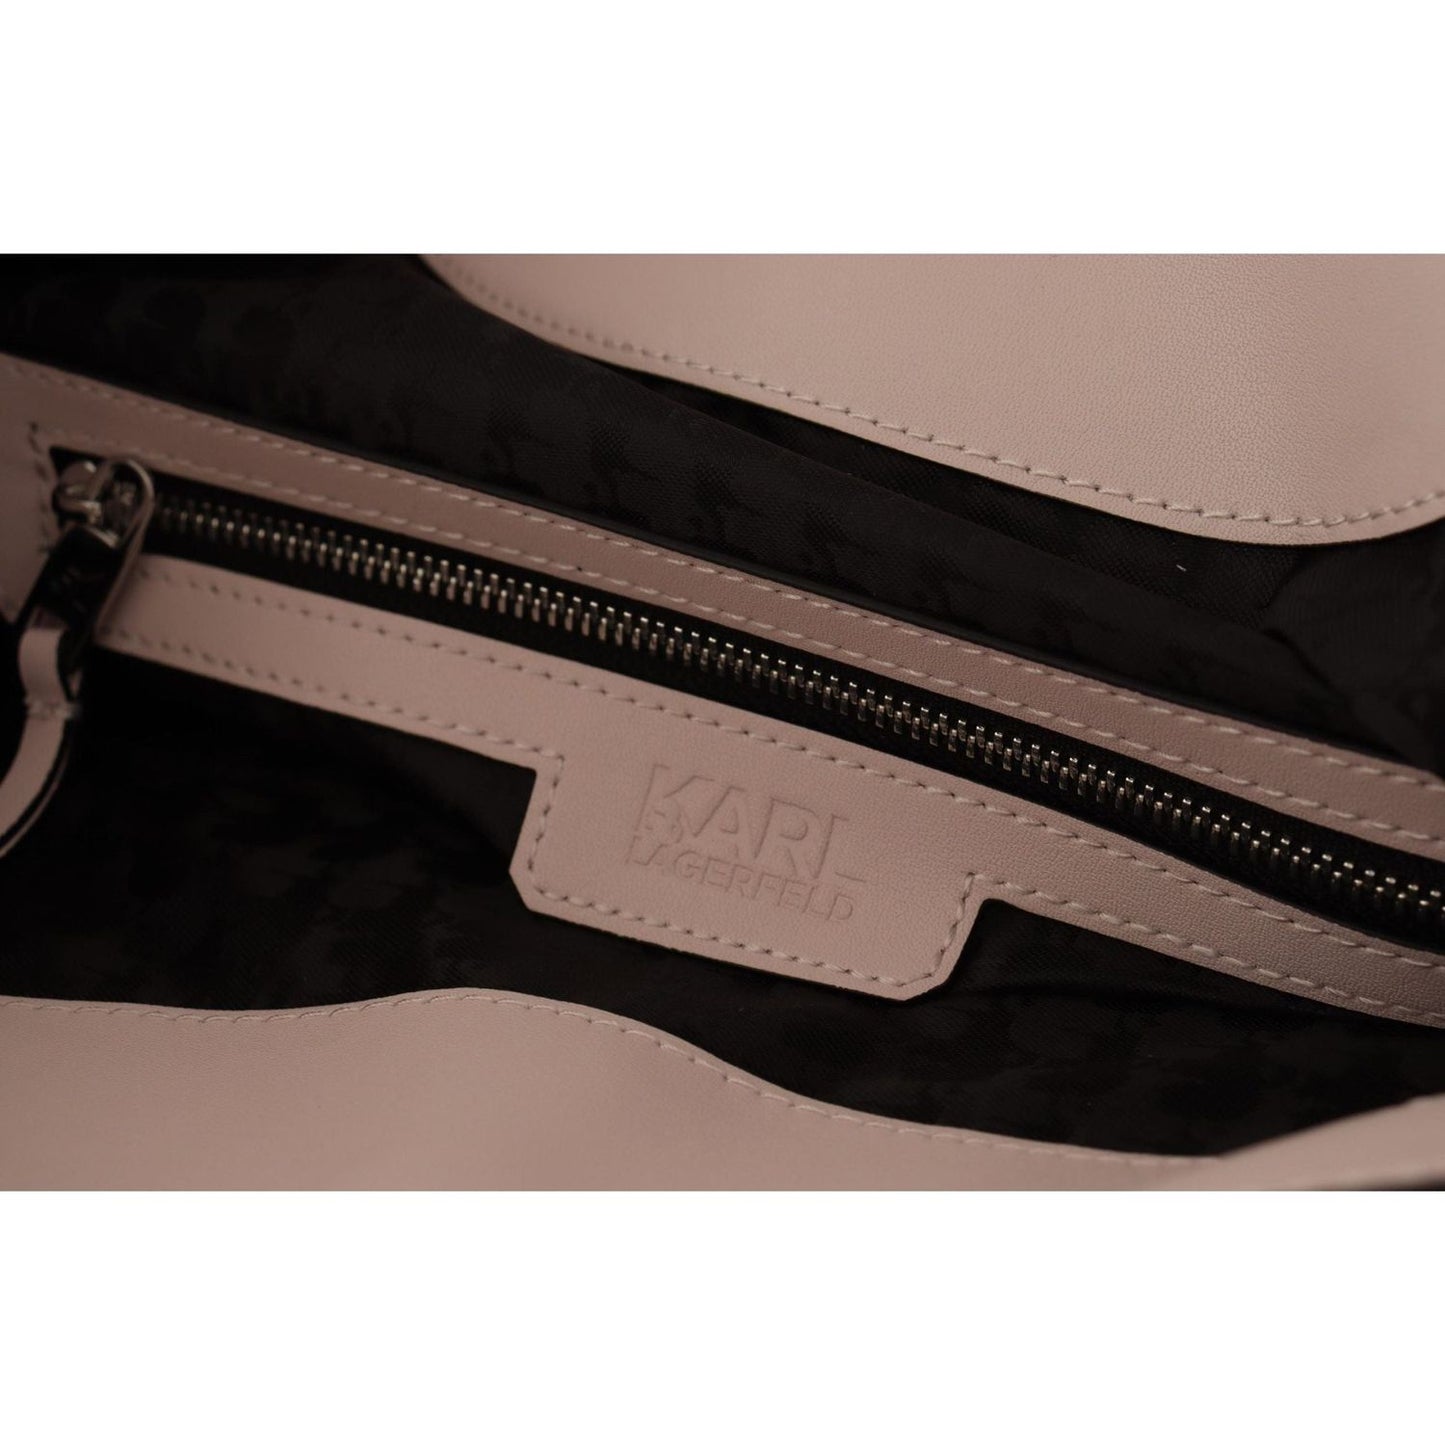 Karl Lagerfeld Elegant Mauve Chalk Leather Shoulder Bag light-pink-mauve-leather-shoulder-bag IMG_7439-scaled-1fccc562-f7e.jpg